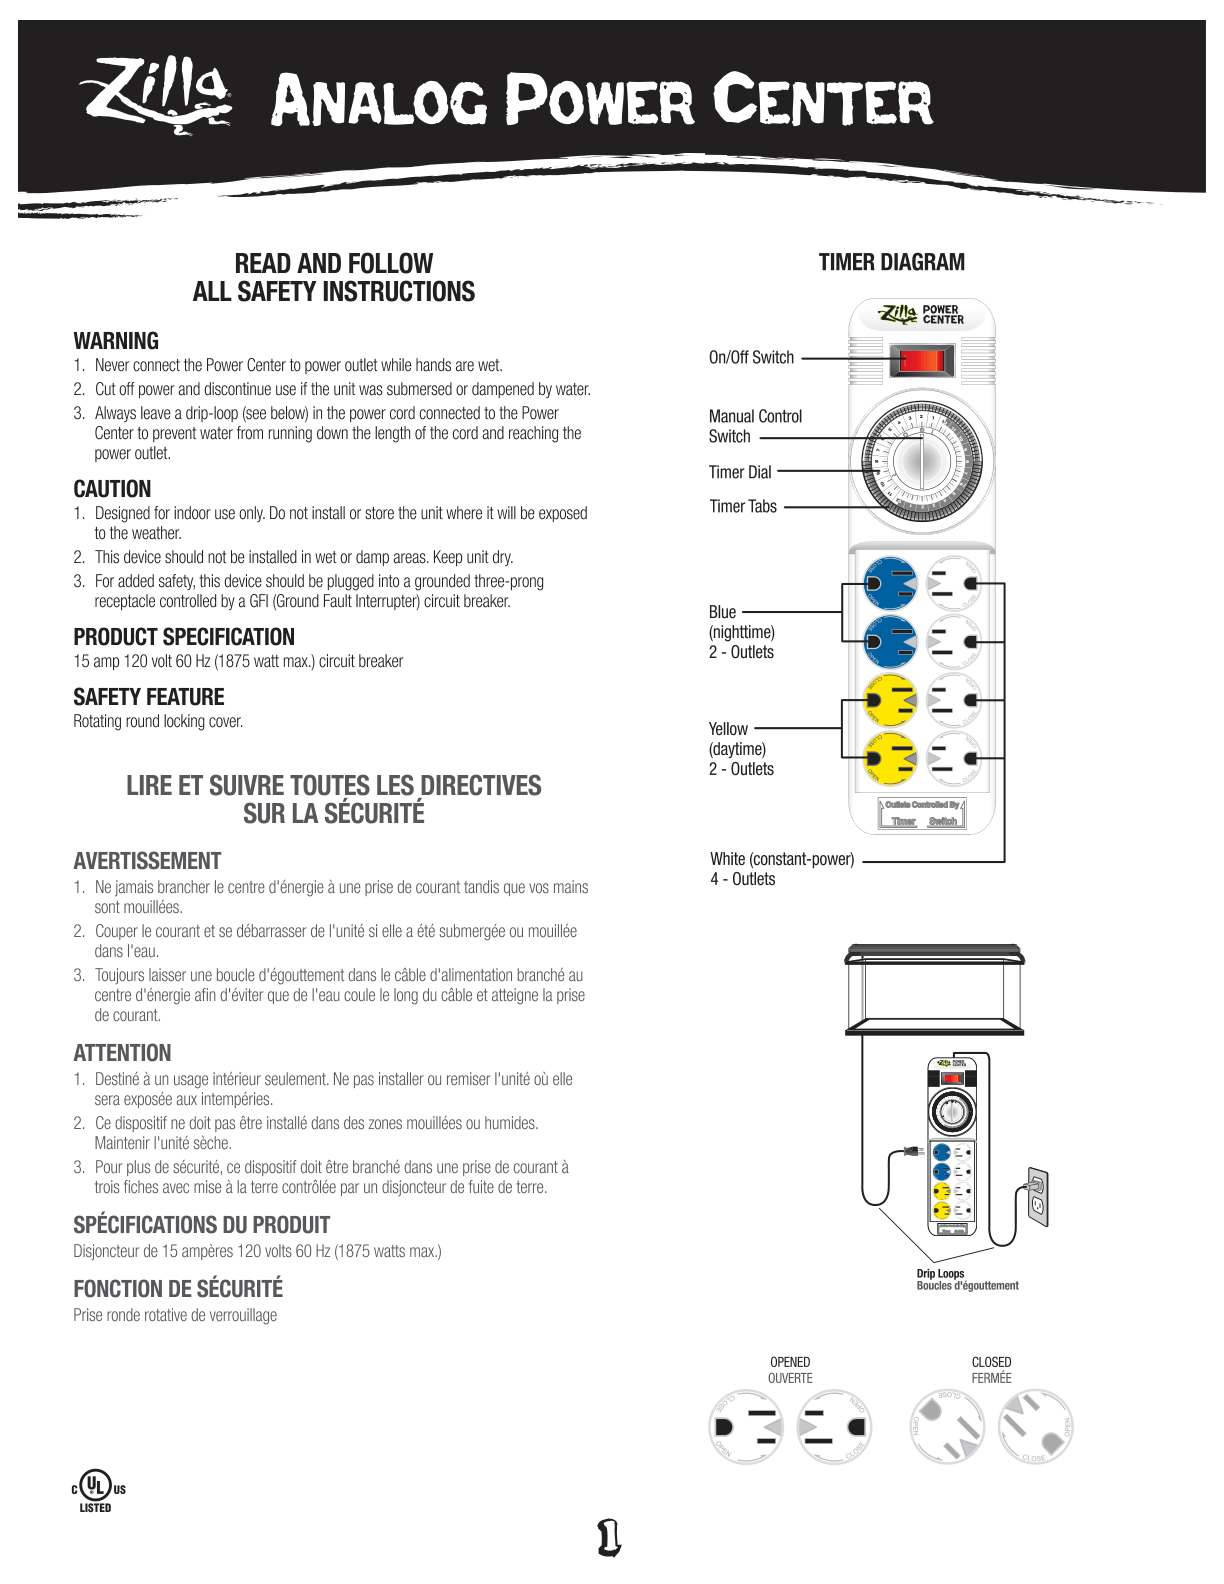 Analog Power Center Instructions